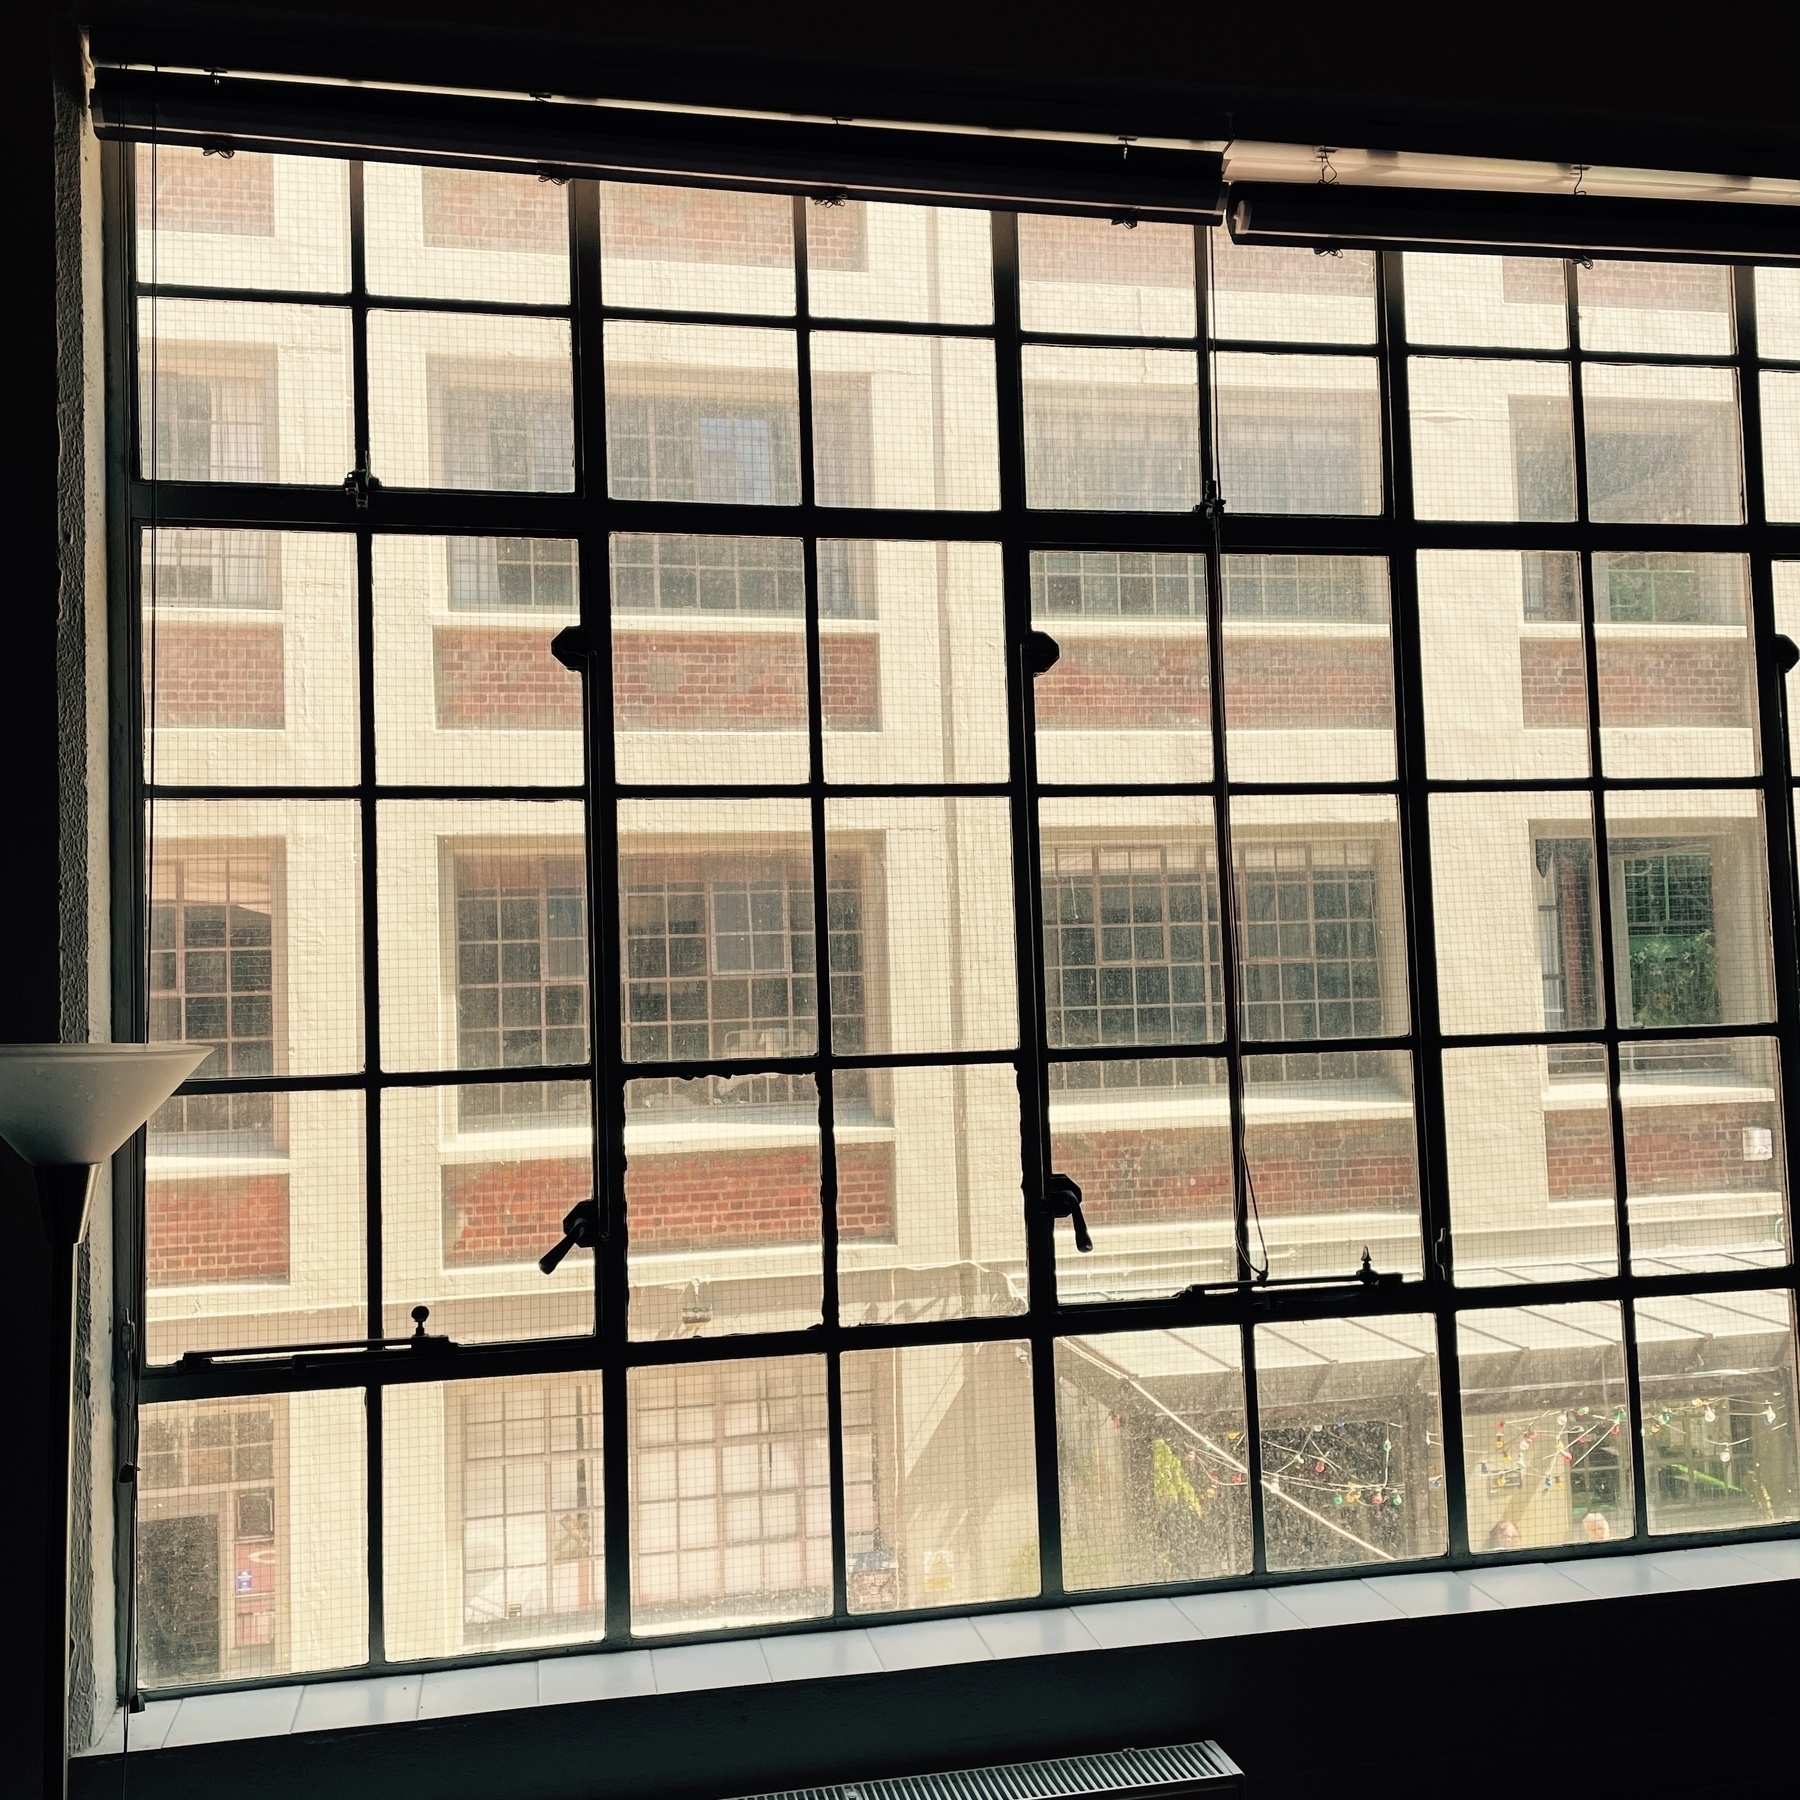 Loft apartment iron window frames. View of similar apartment block across courtyard. 